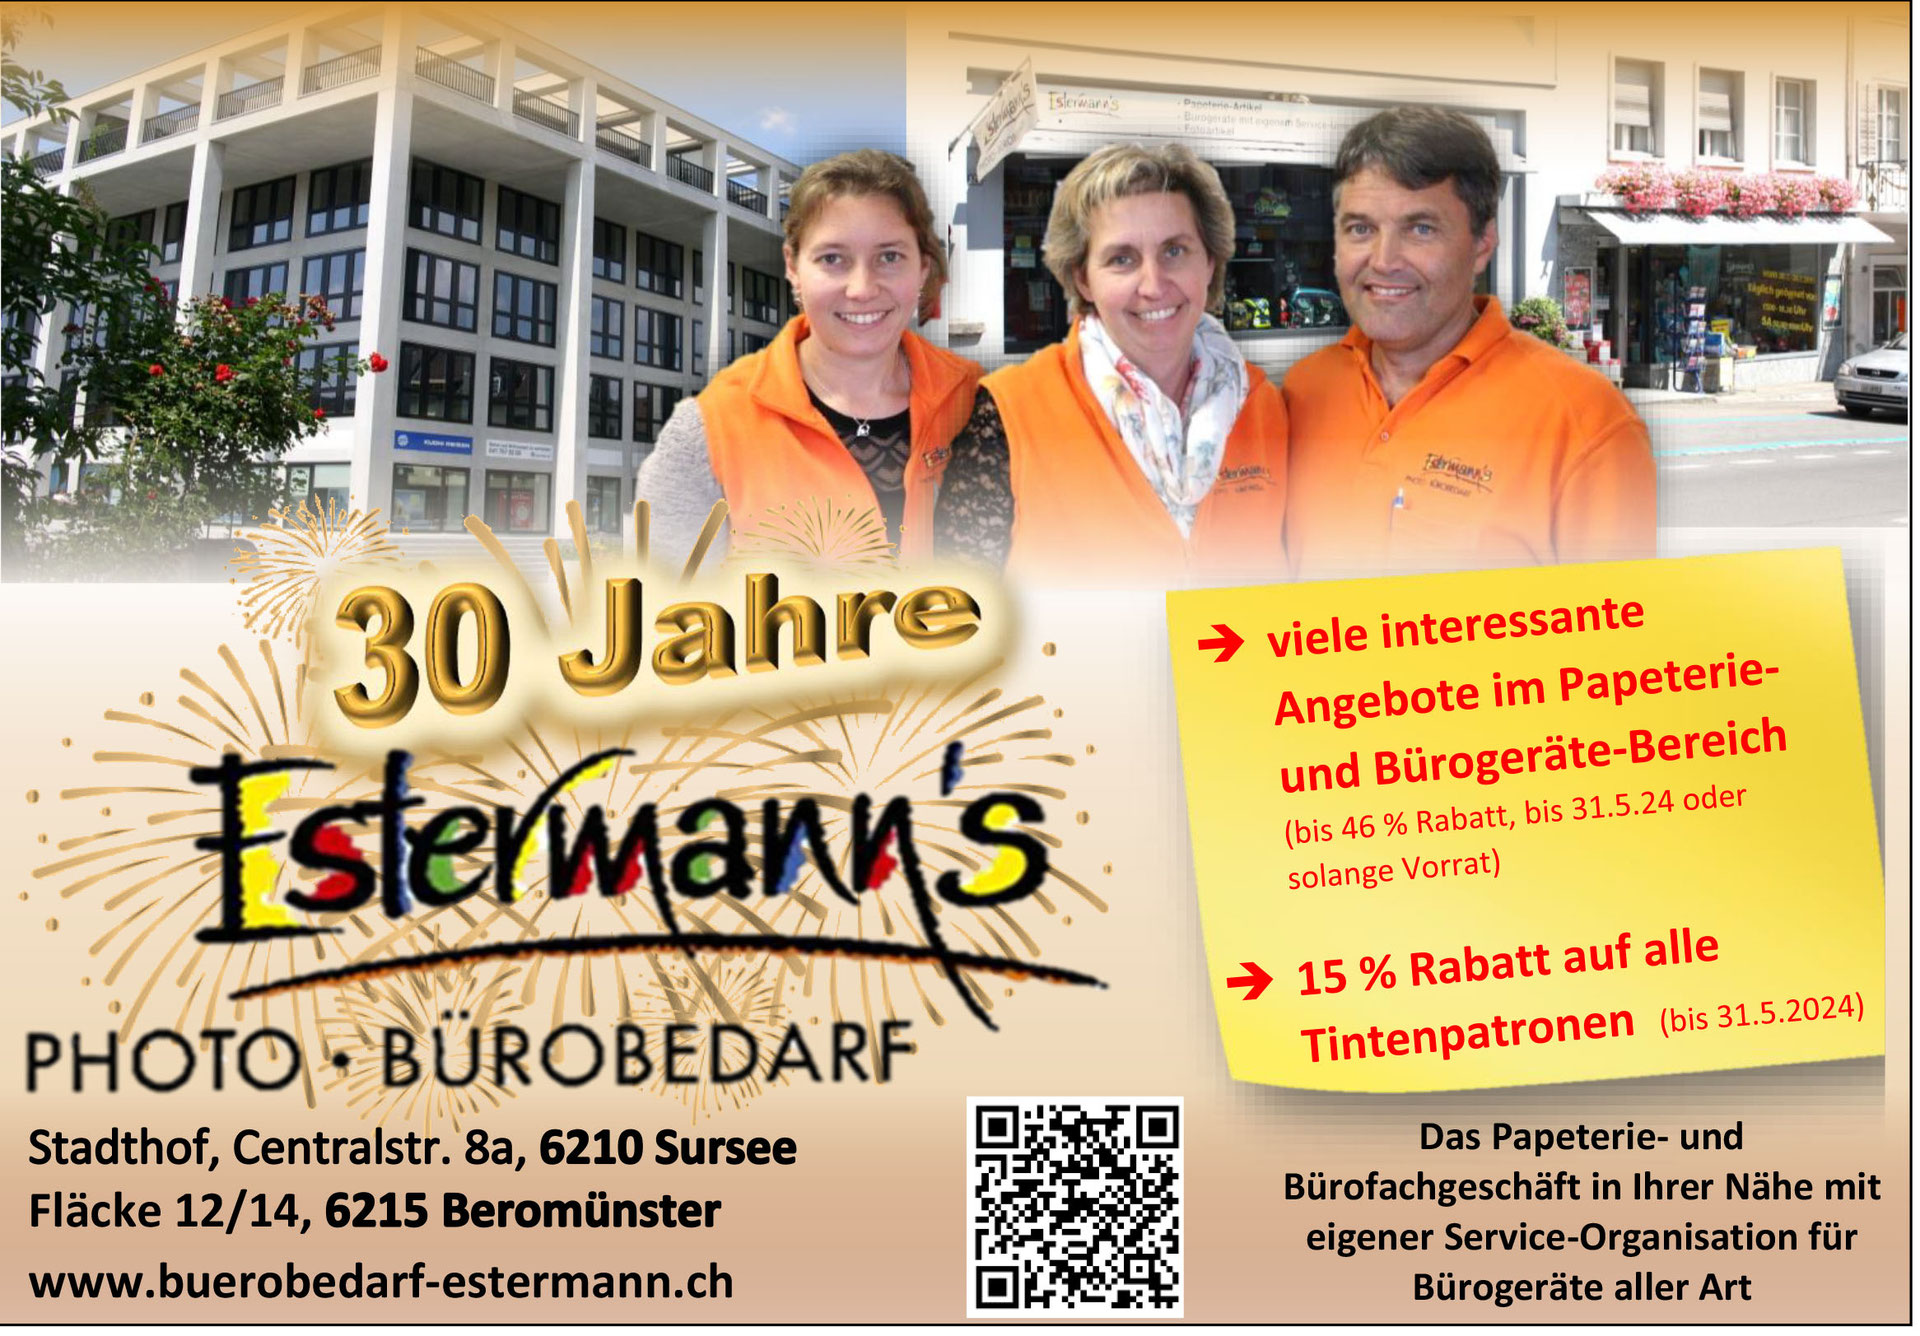 (c) Buerobedarf-estermann.ch